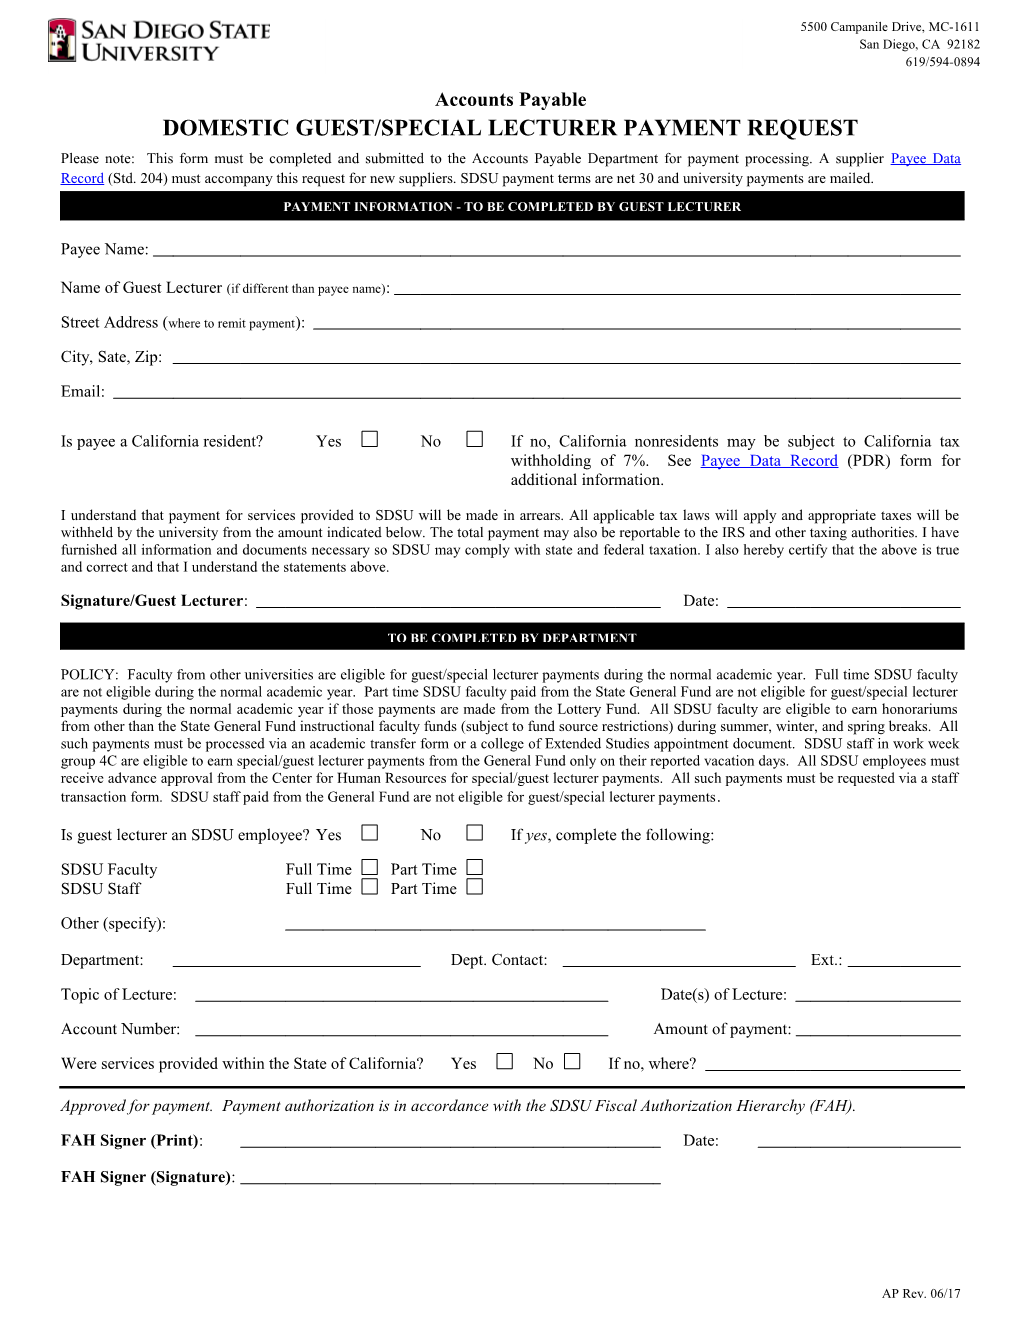 Guest/Special Lecturer Payment Request Form; Rev. 6/20/2016